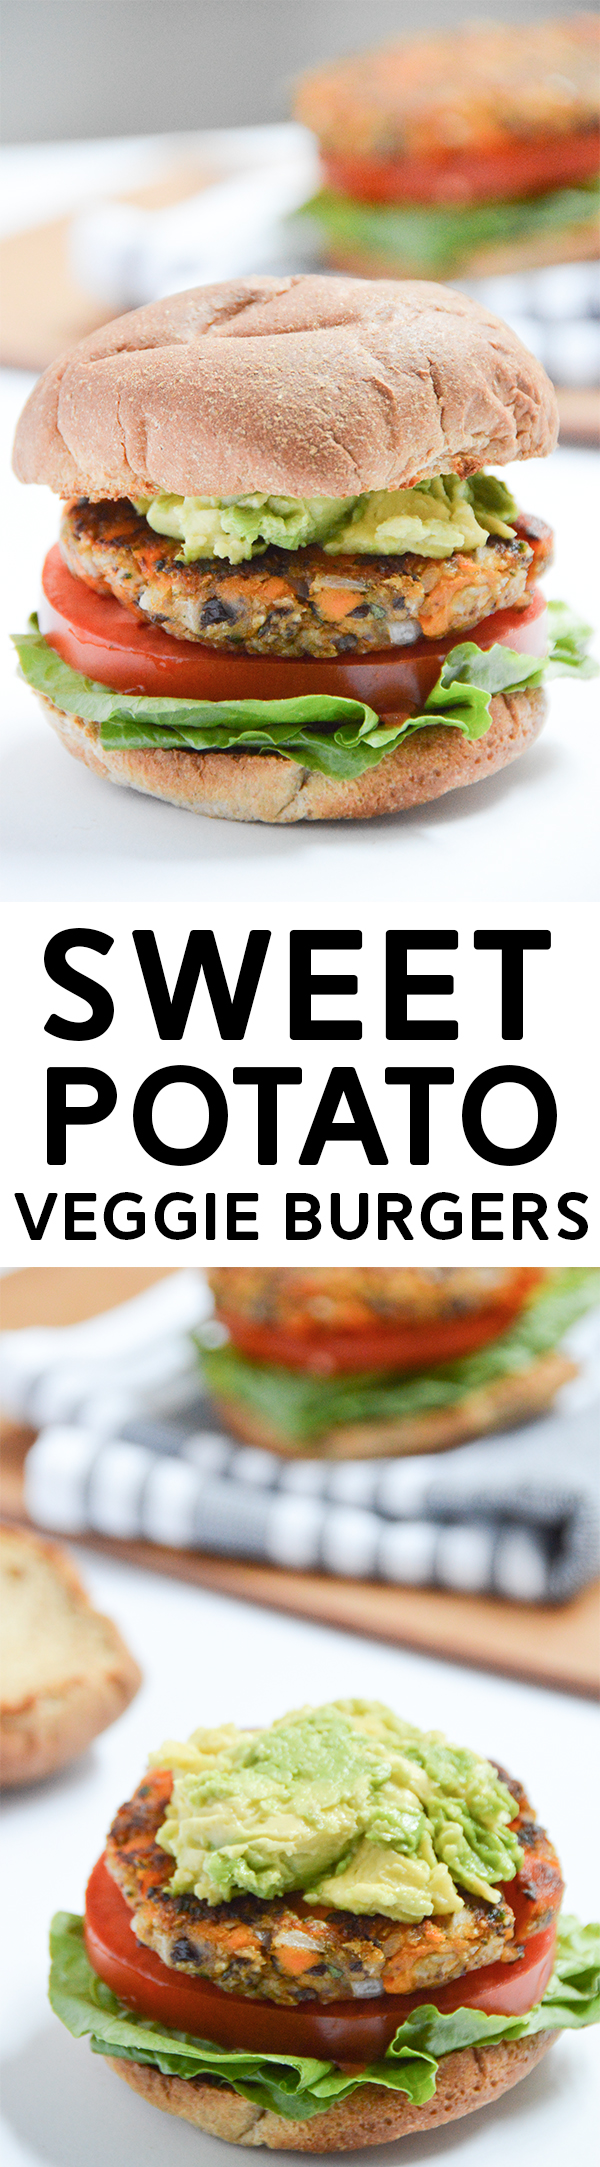 Sweet Potato Veggie Burgers - vegan and gluten-free